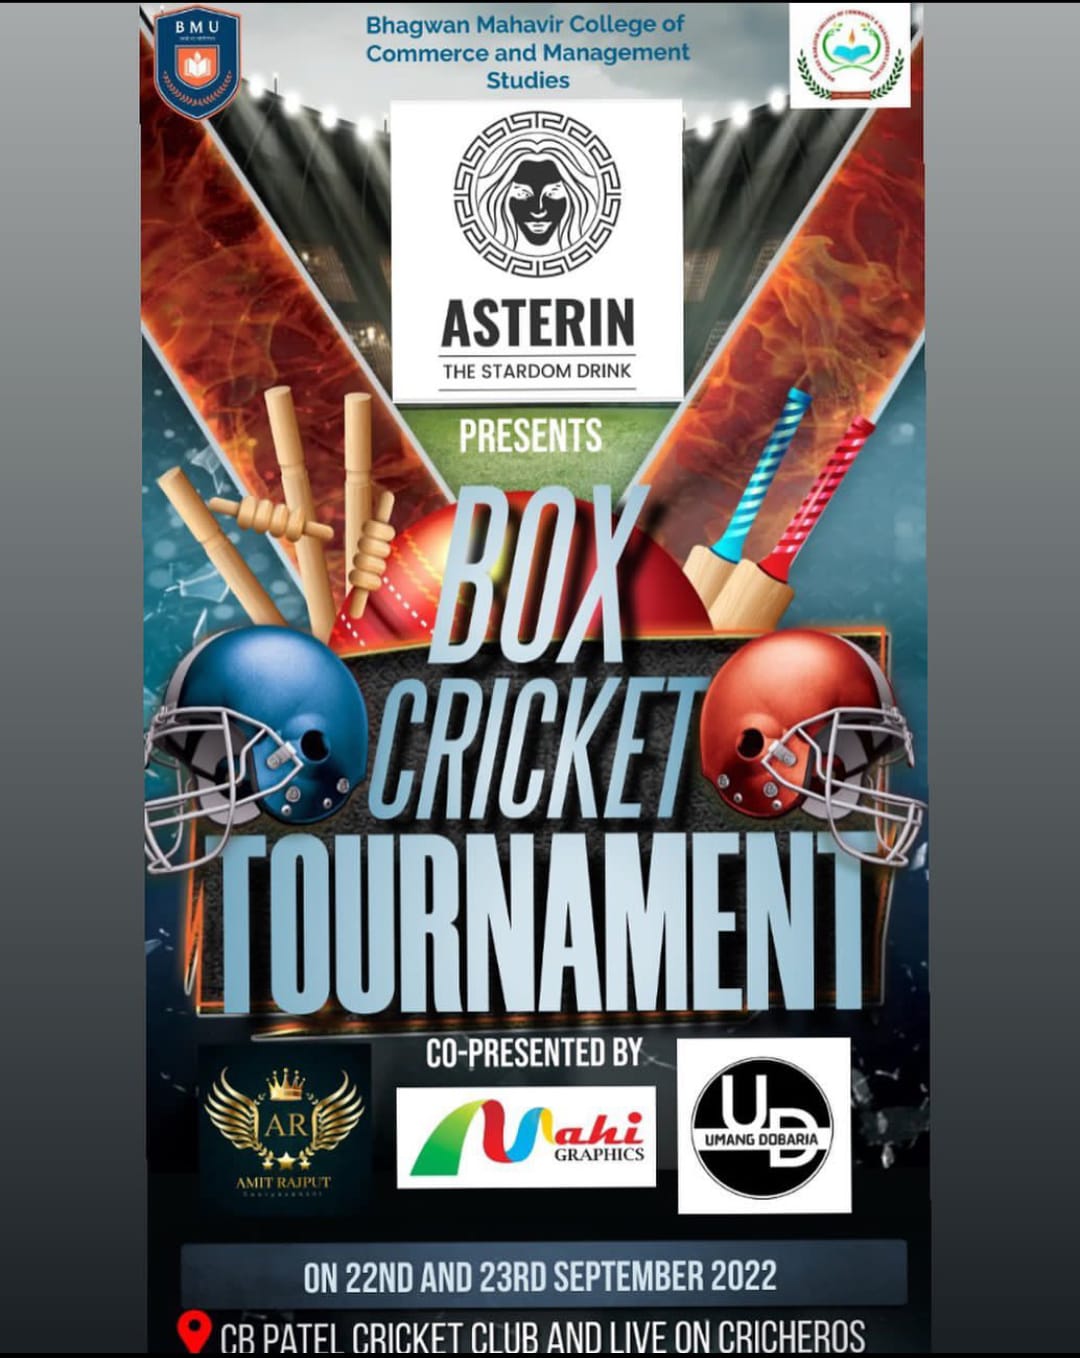 box cricket tournament